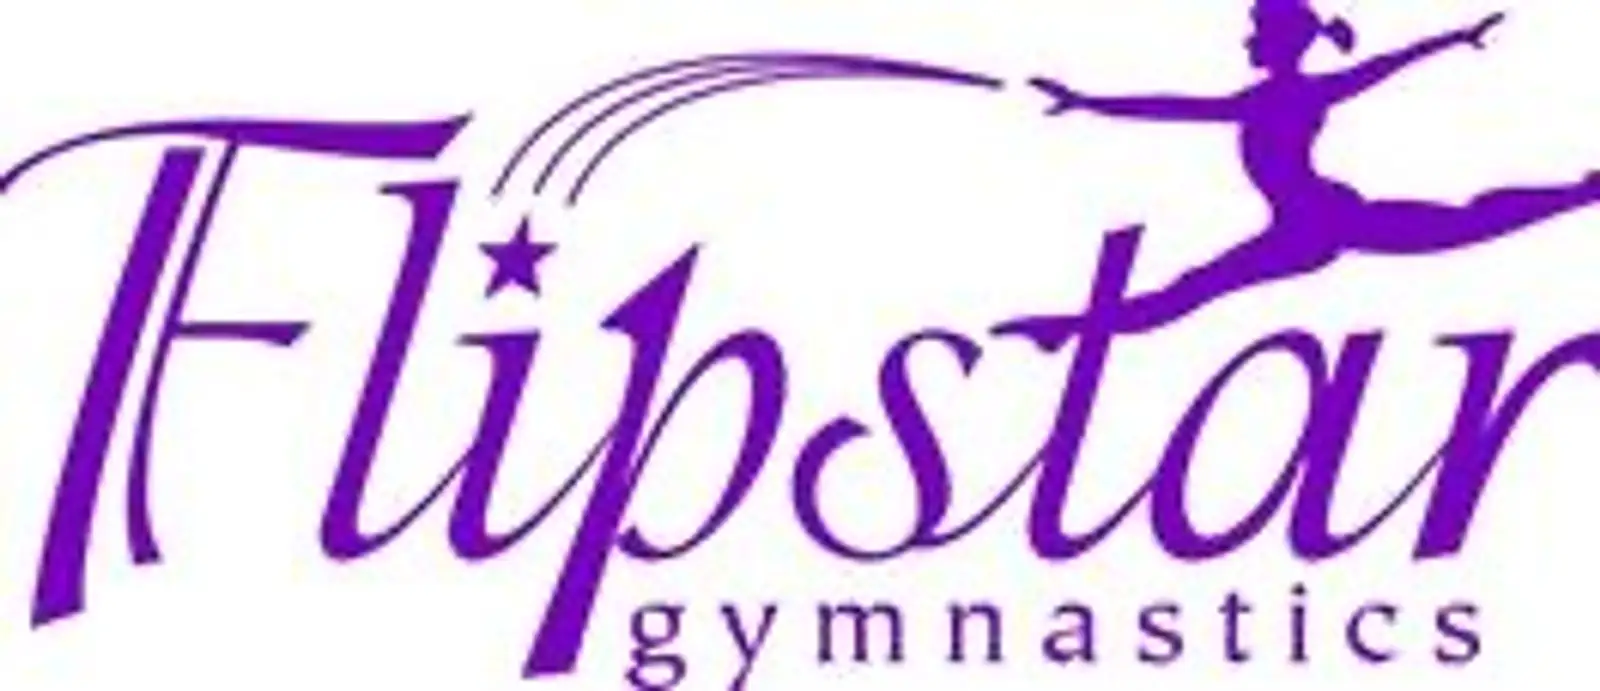 Flipstar Gymnastics  logo